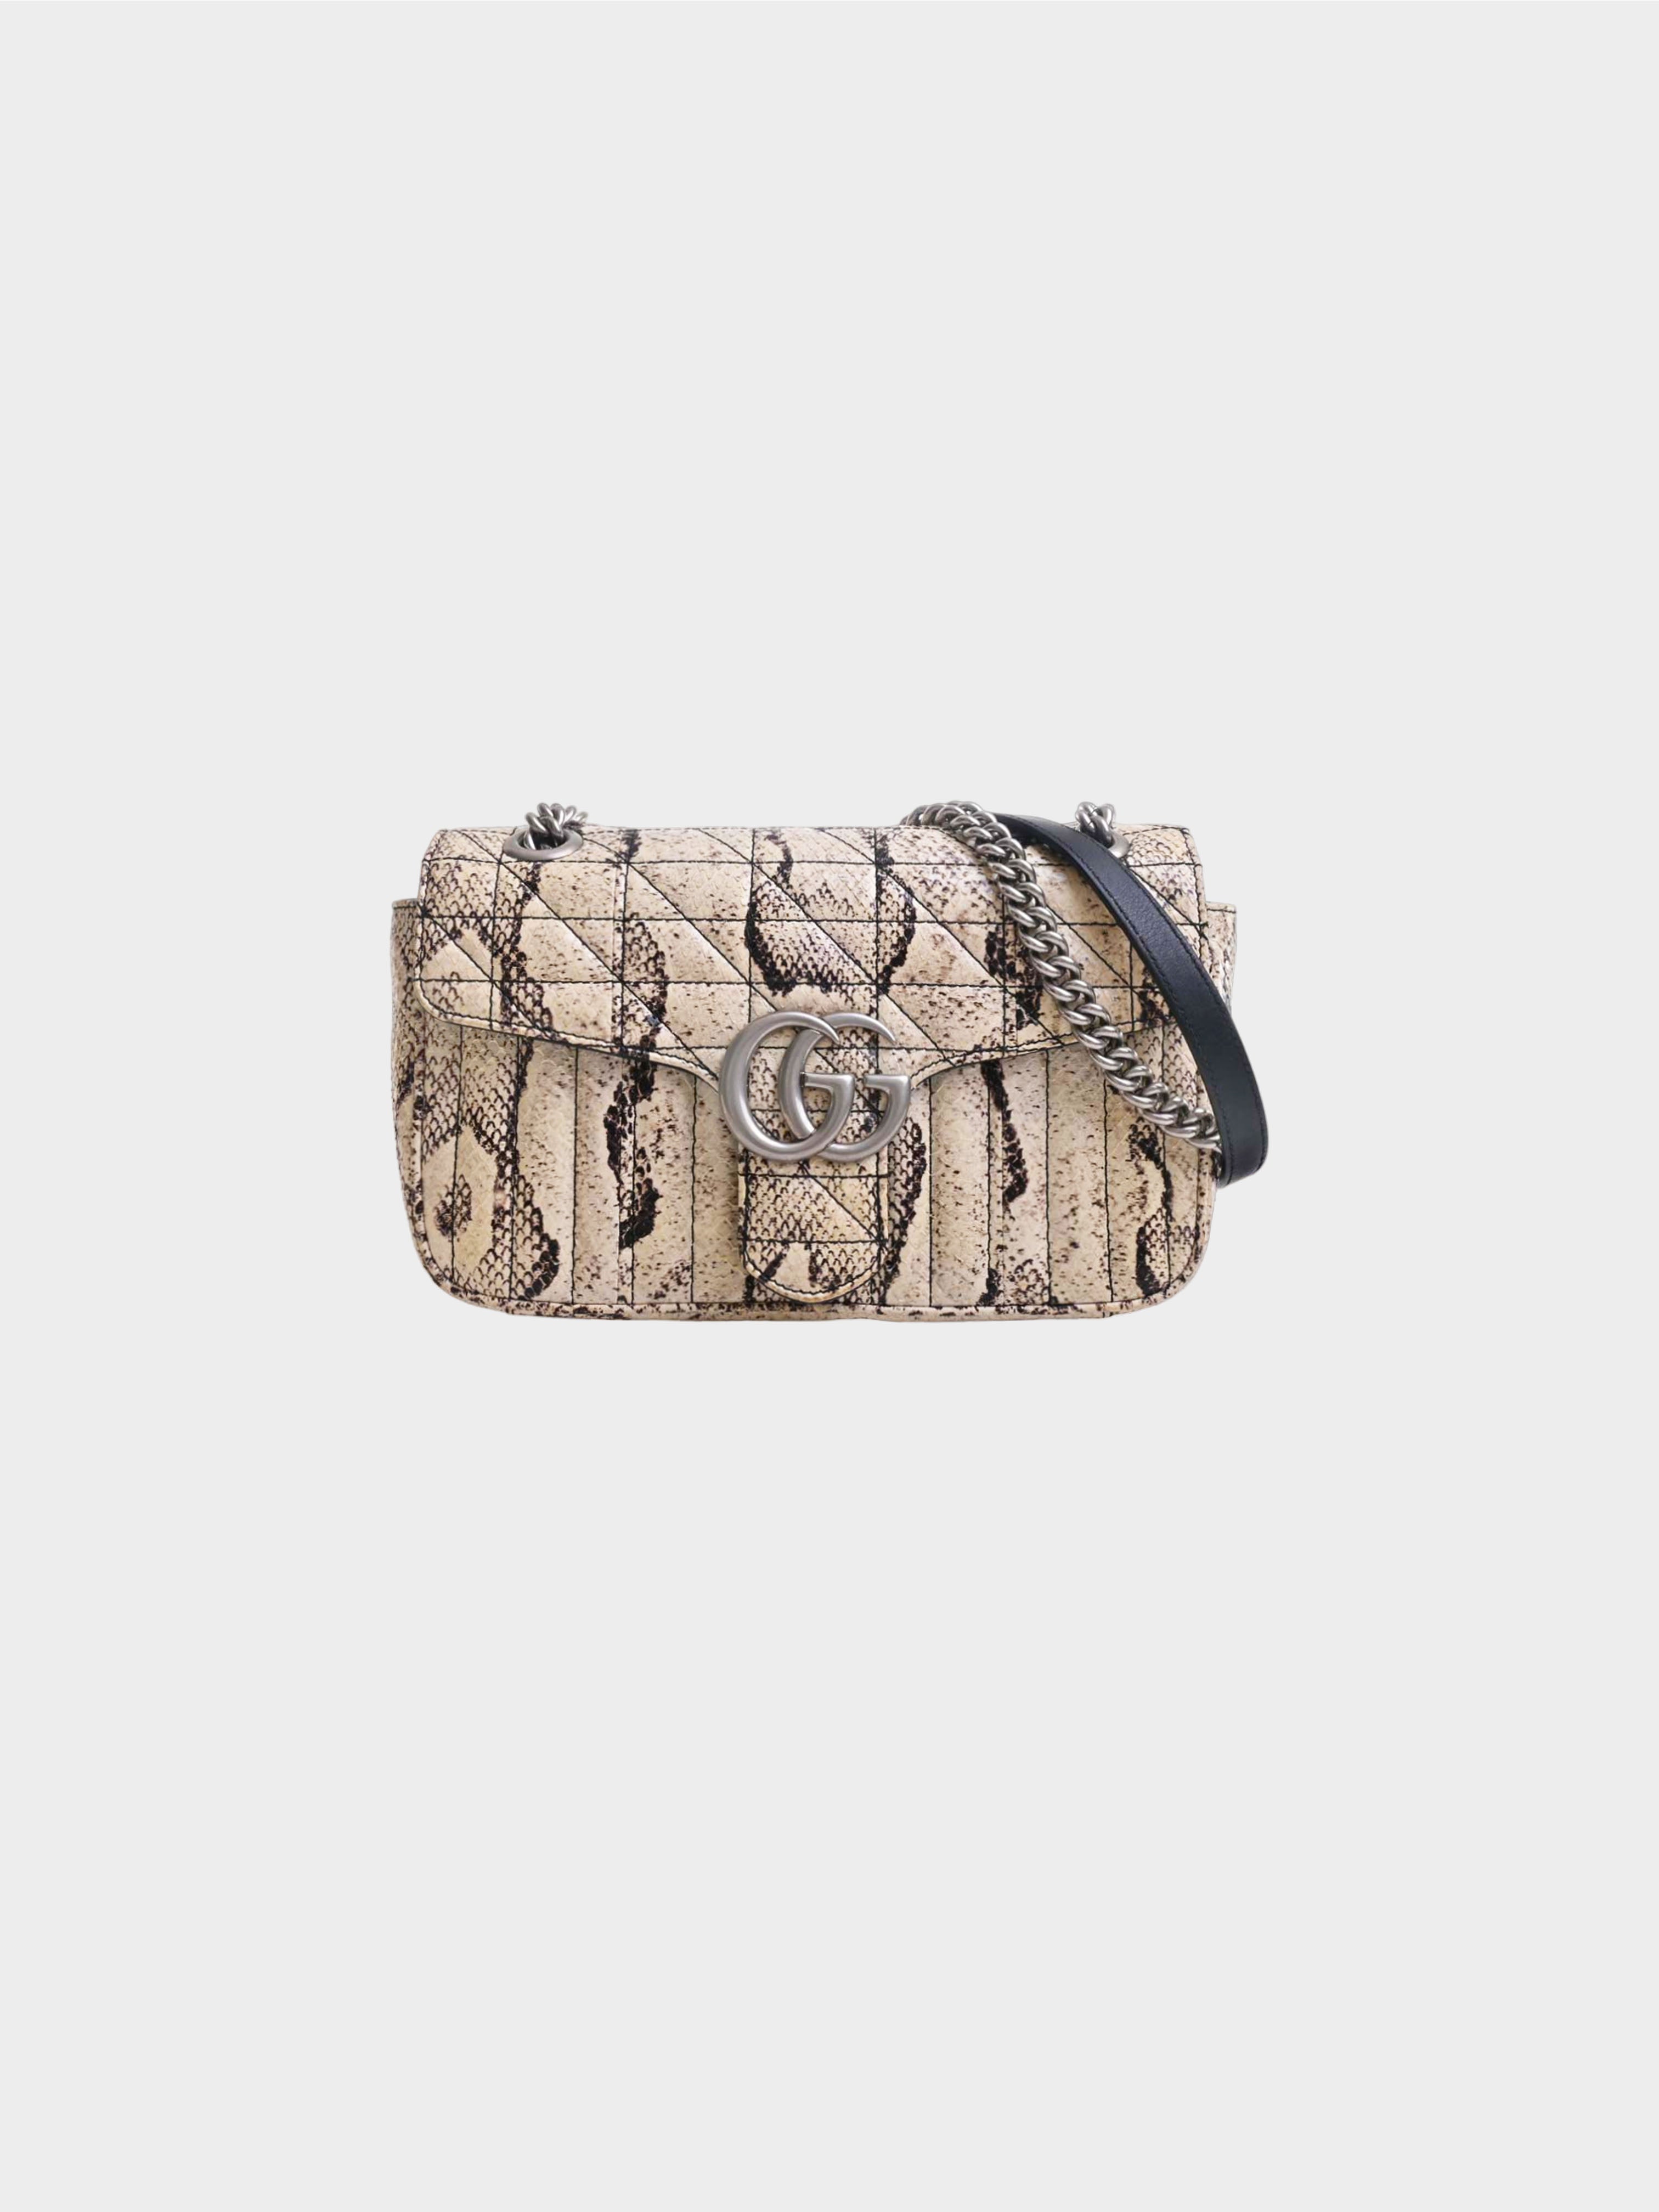 Gucci 2020s Beige GG Marmont Python Chain Shoulder Bag